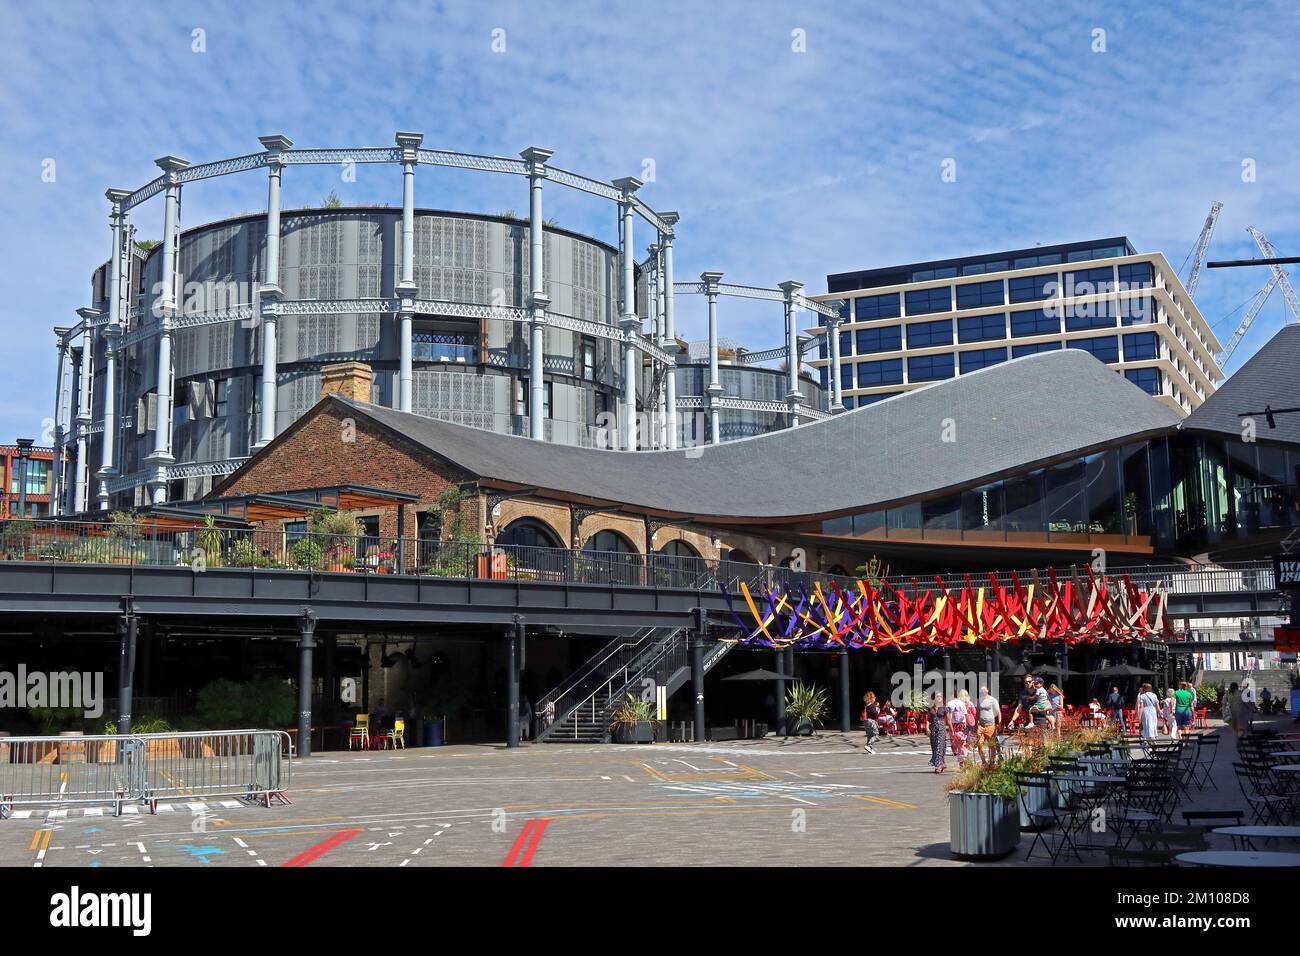 Coaldrops yard, Kings Cross development, retail, entertainment, shops, stores , London, England, UK, N1C 4DH Stock Photo